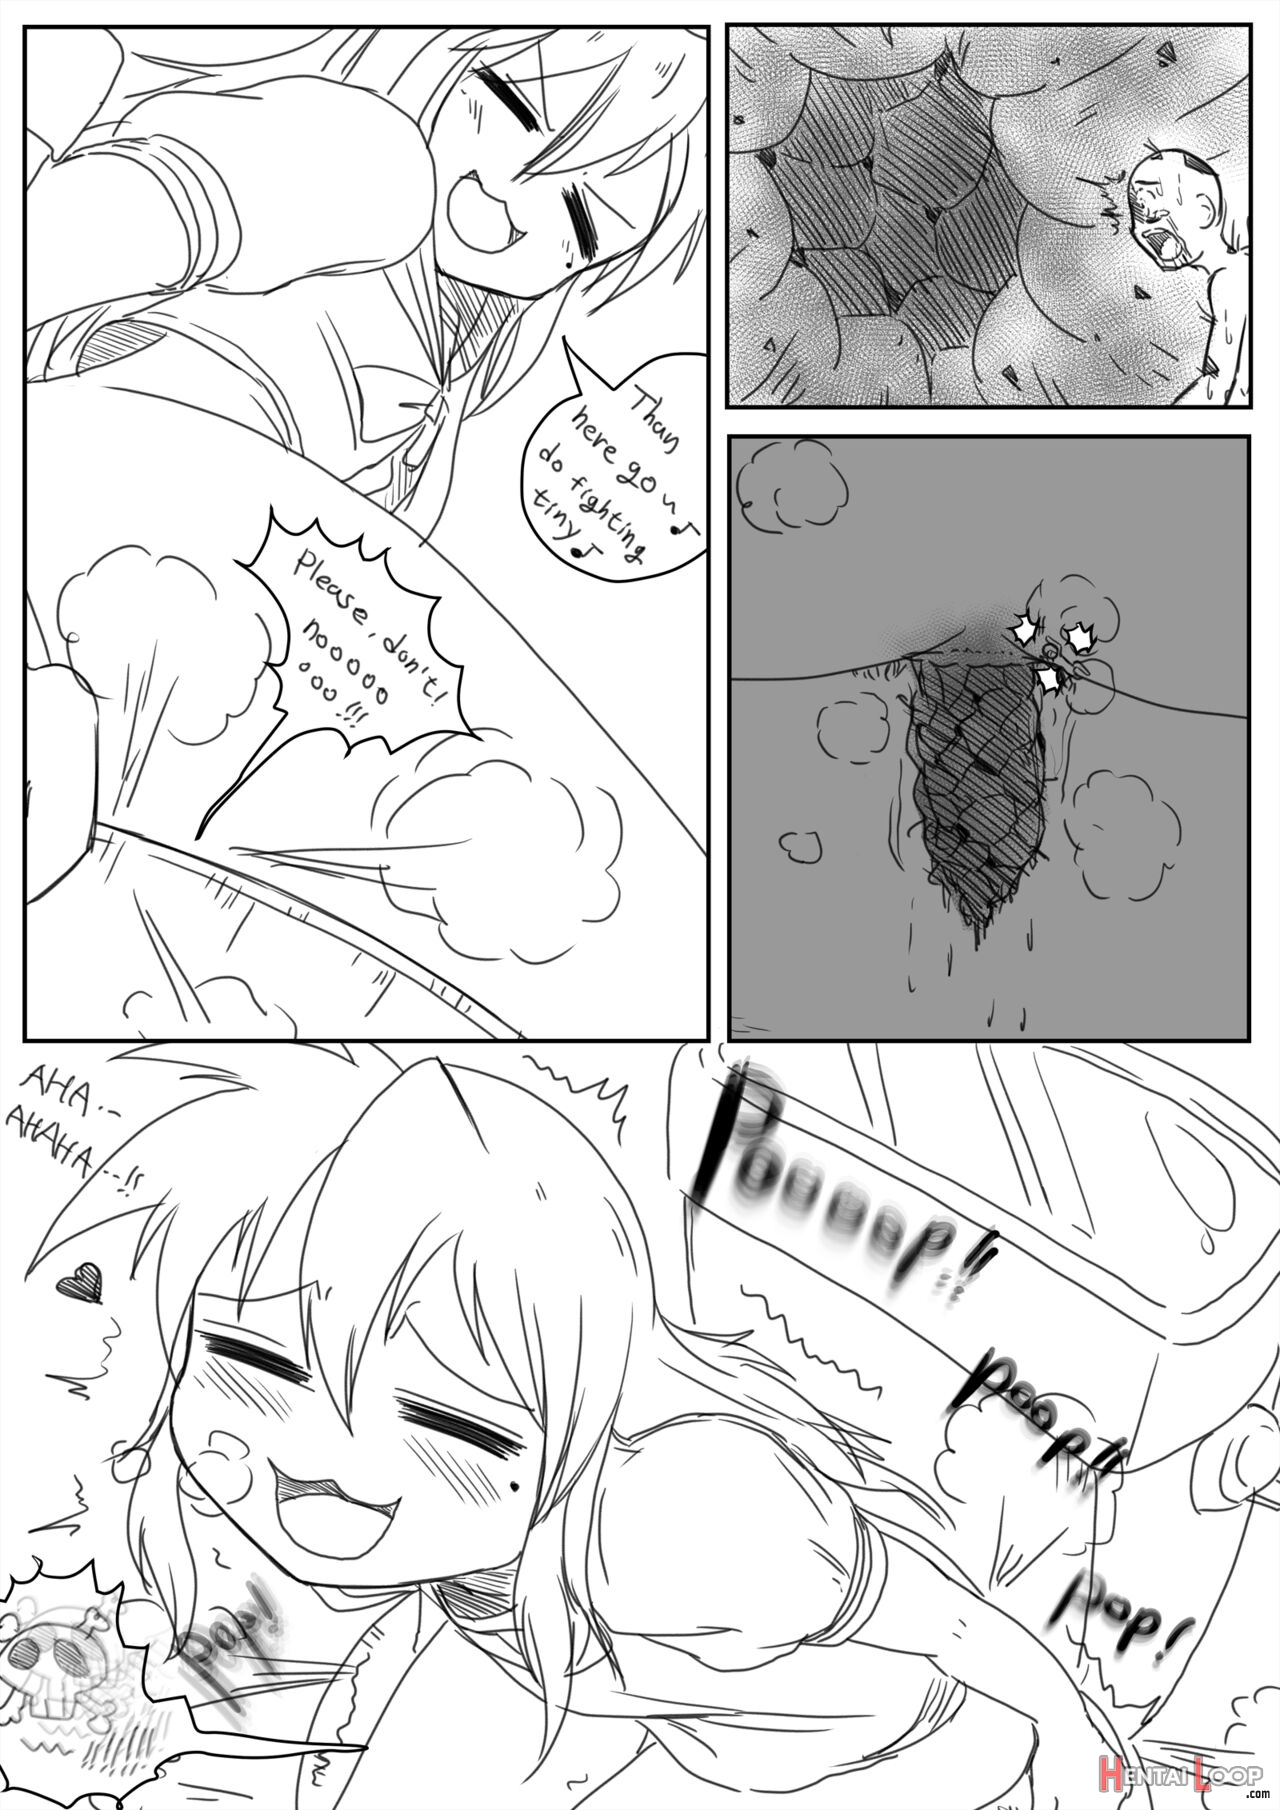 The Little Secret Of Izumi-san page 2